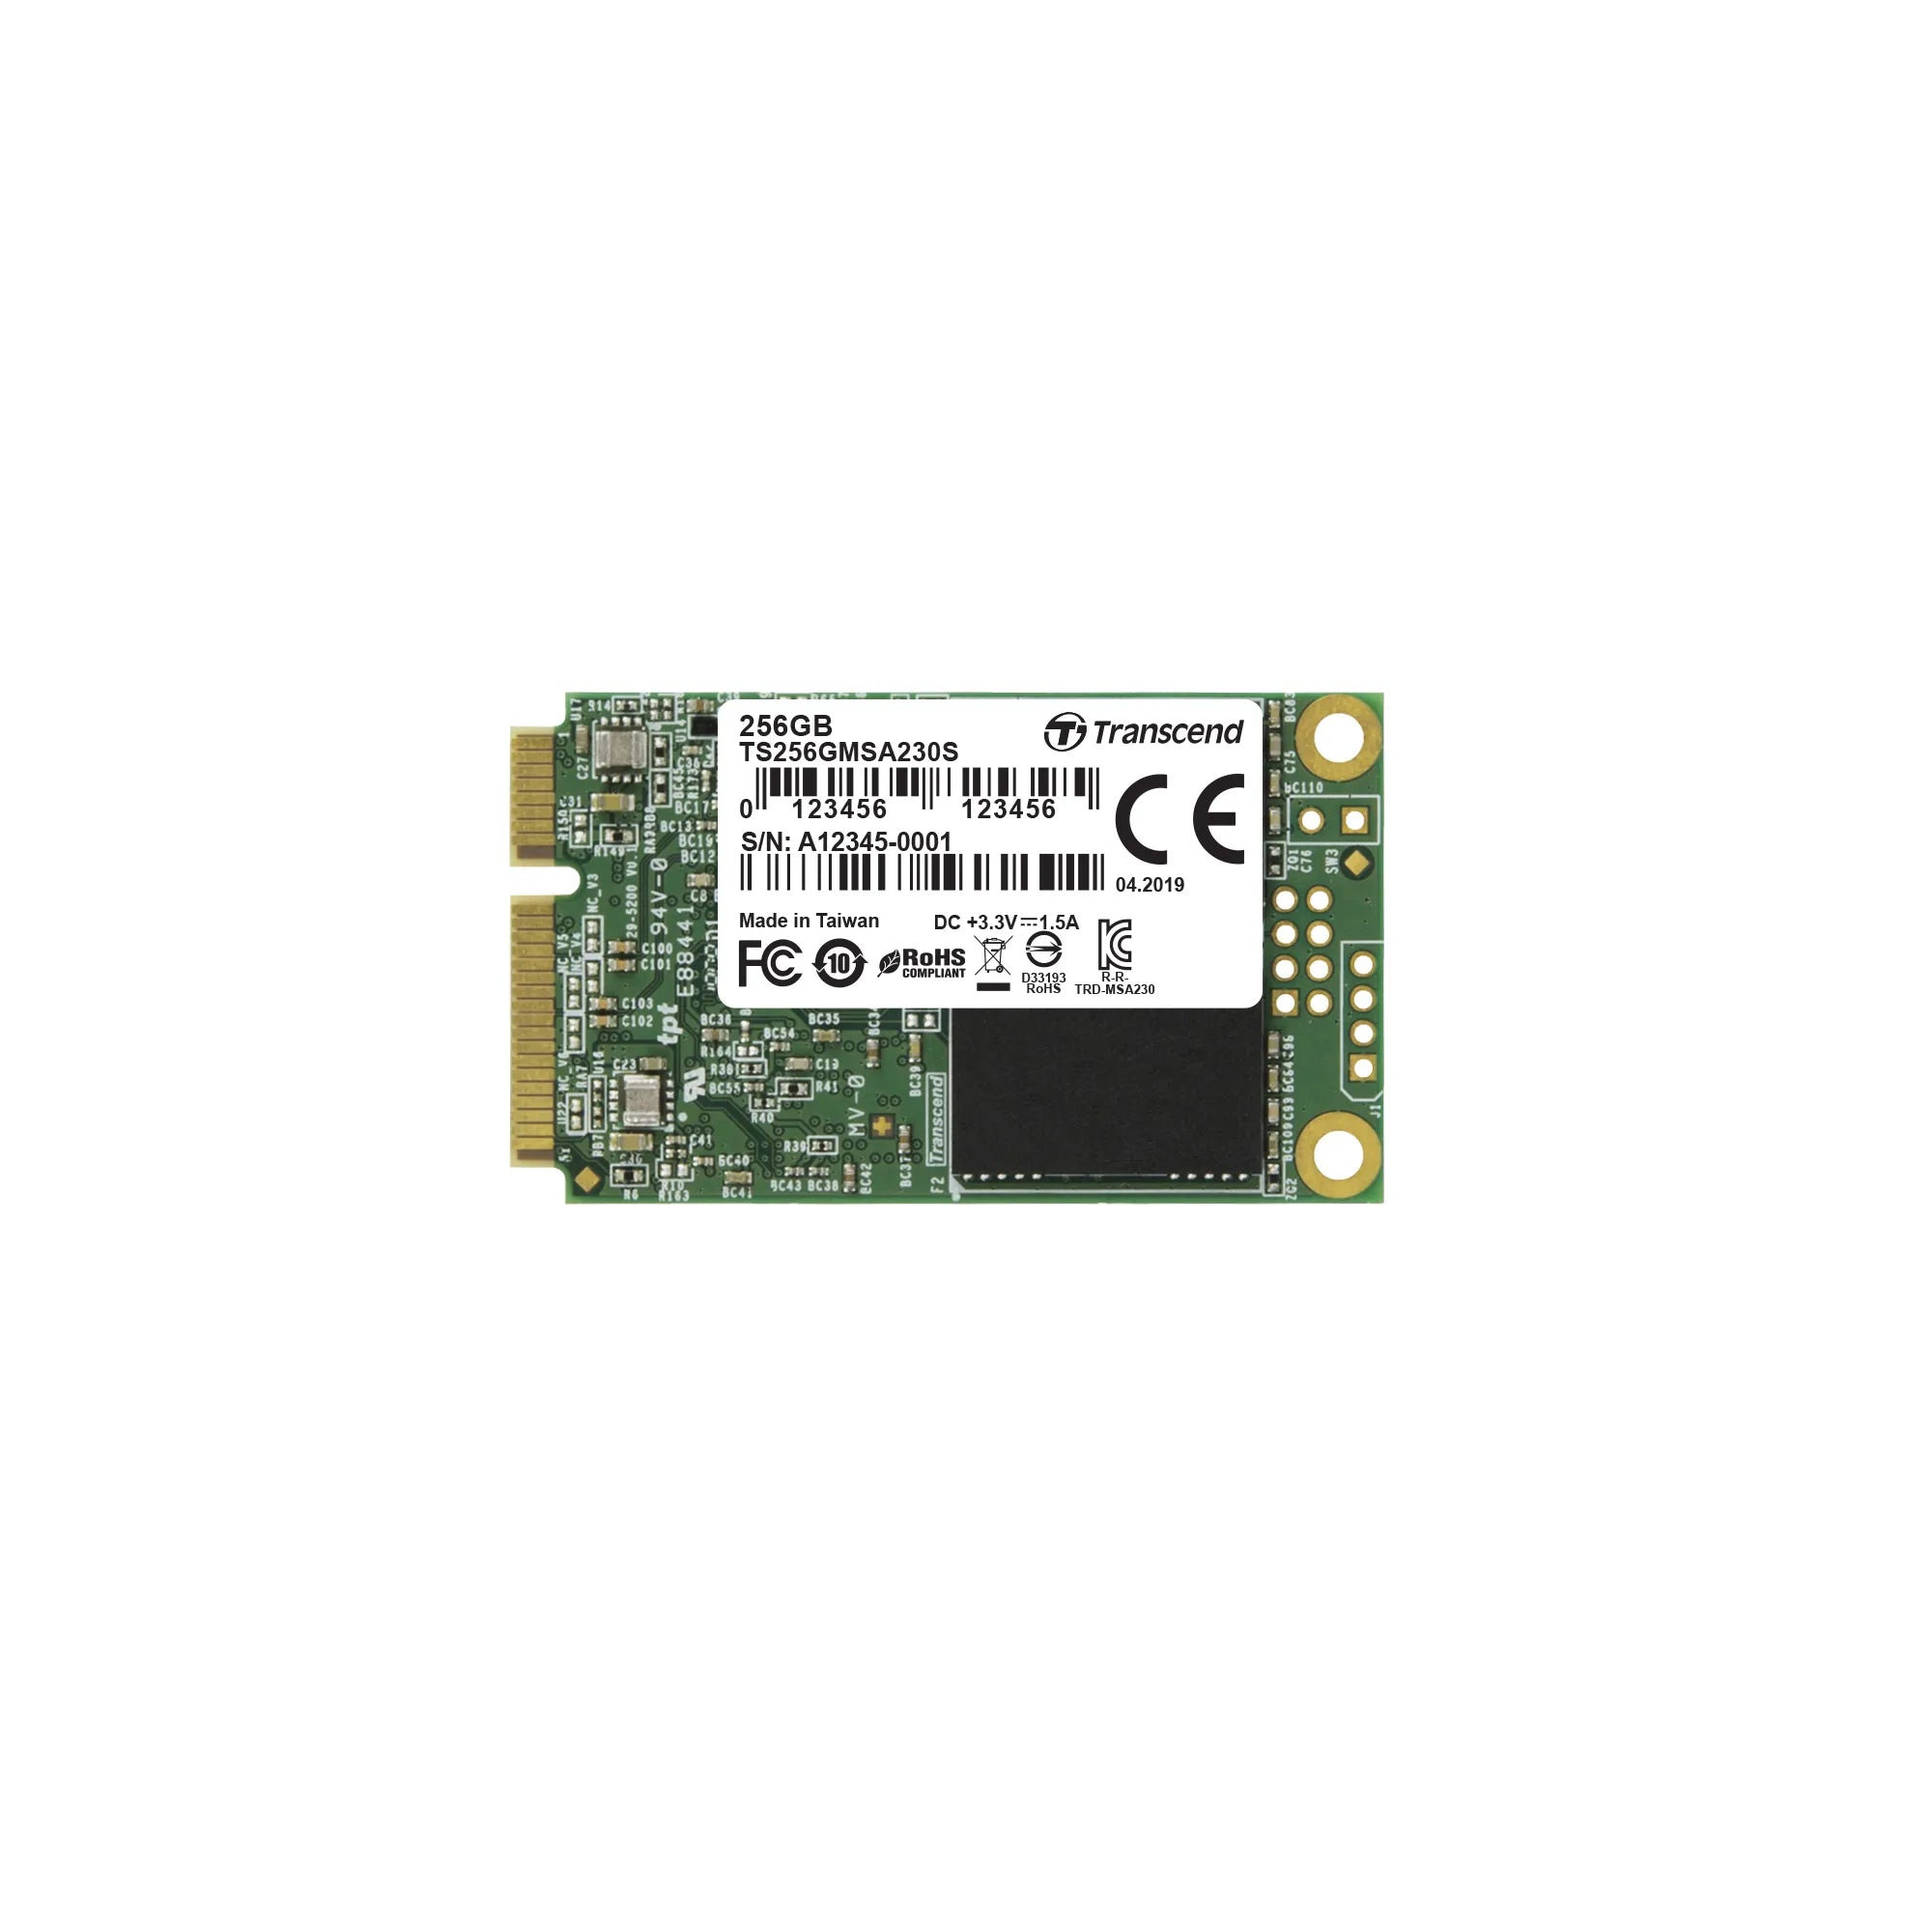 TRANSCEND-256GB-MSA230-MSATA-SSD